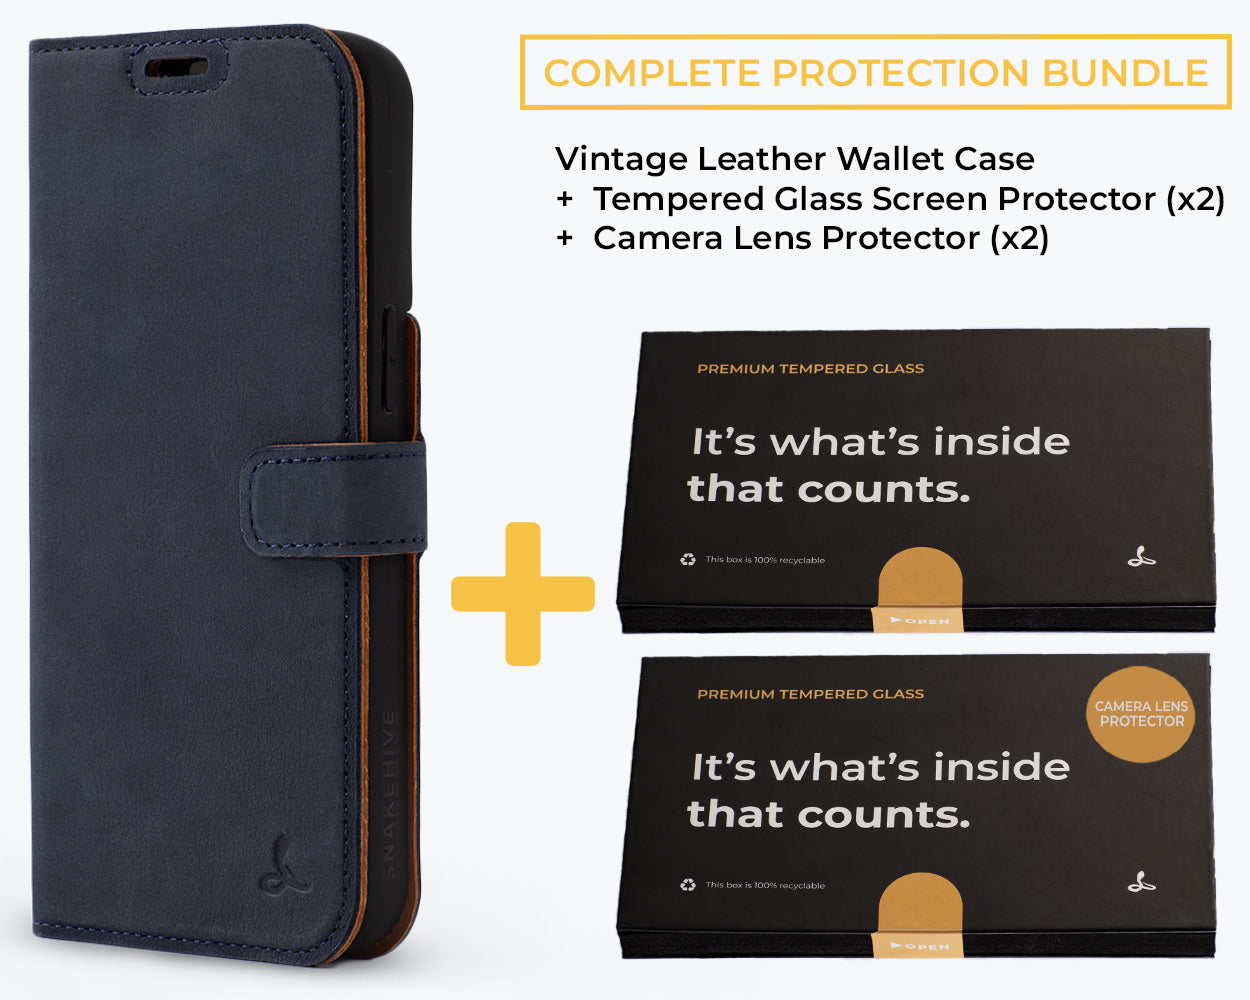 Complete Protection Bundle (Vintage Wallet) - Apple iPhone 12 Pro Max